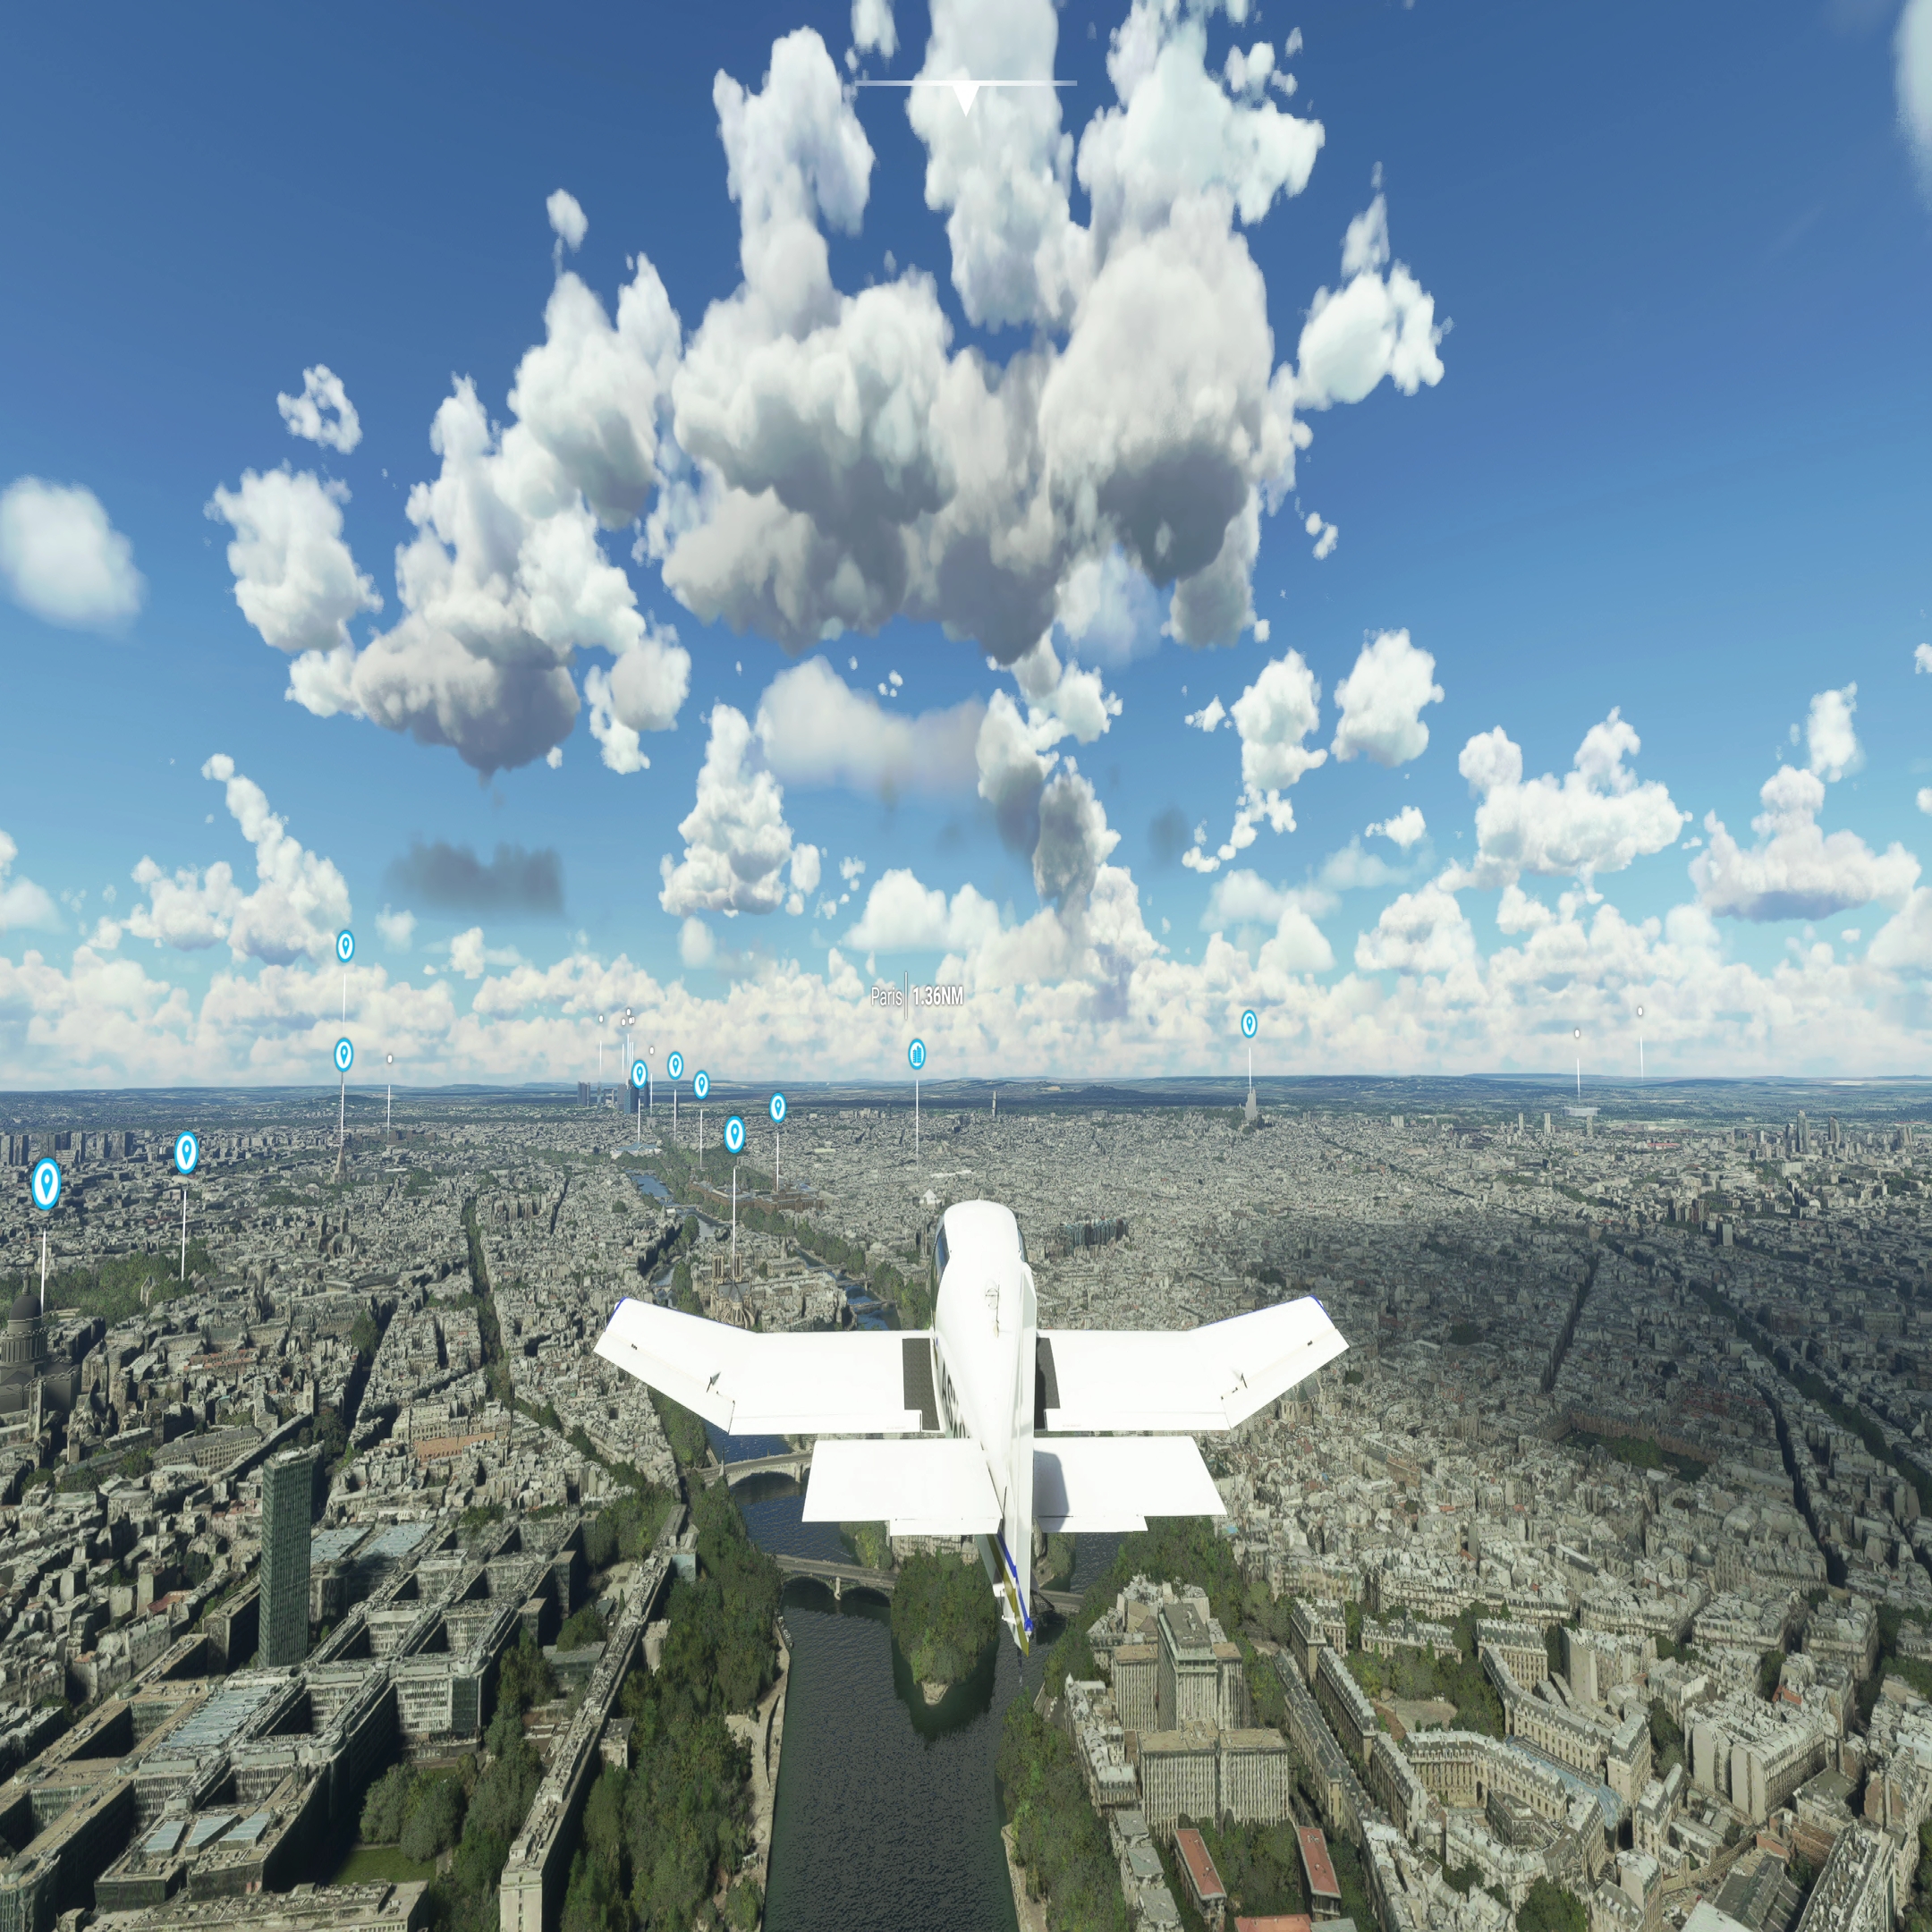 Microsoft Flight Simulator 2020, Xbox Series X [Physical]